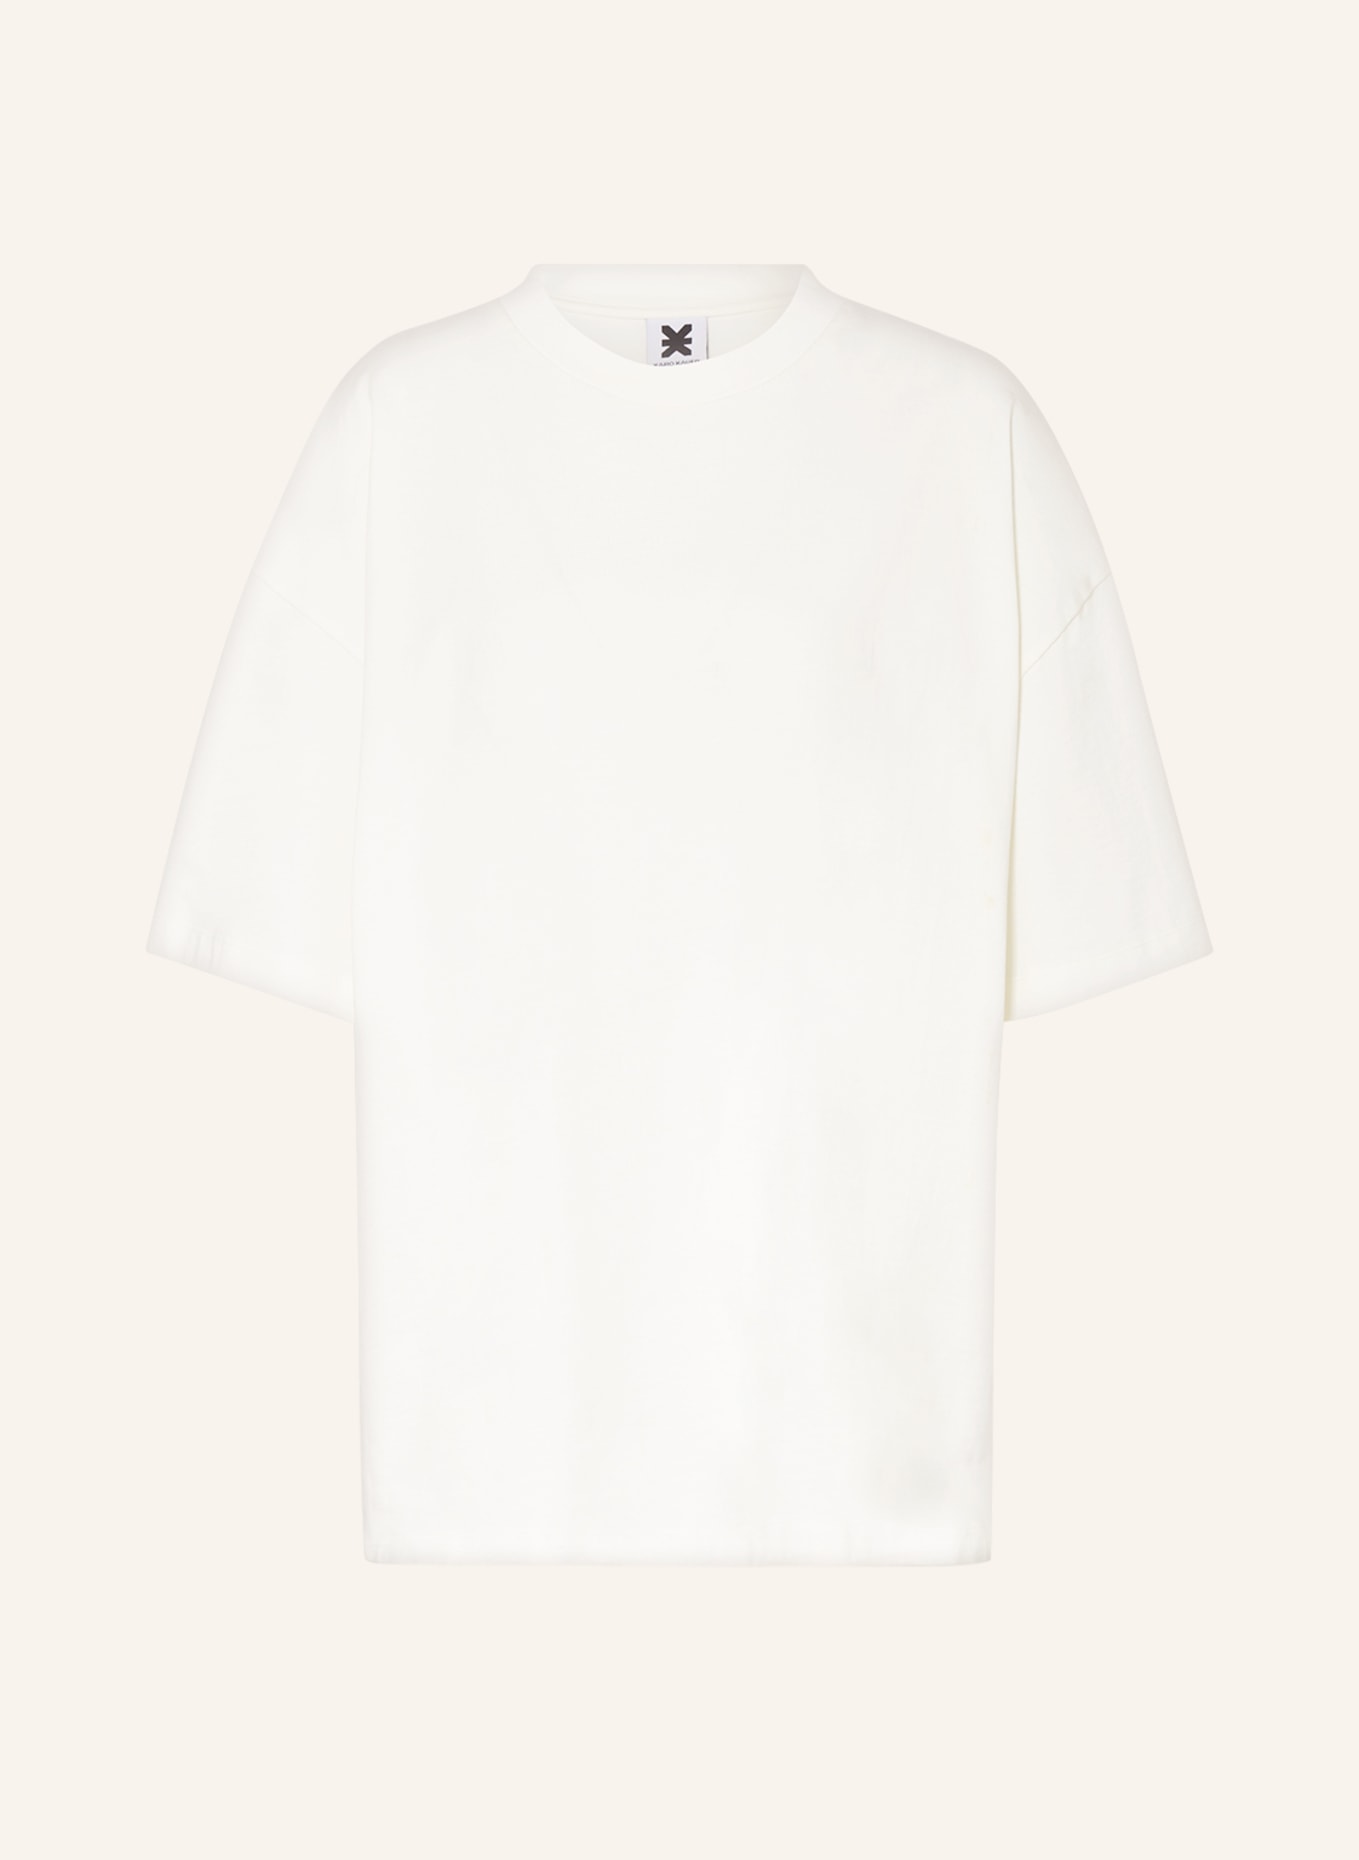 KARO KAUER Oversized-Shirt, Farbe: WEISS/ OLIV (Bild 1)